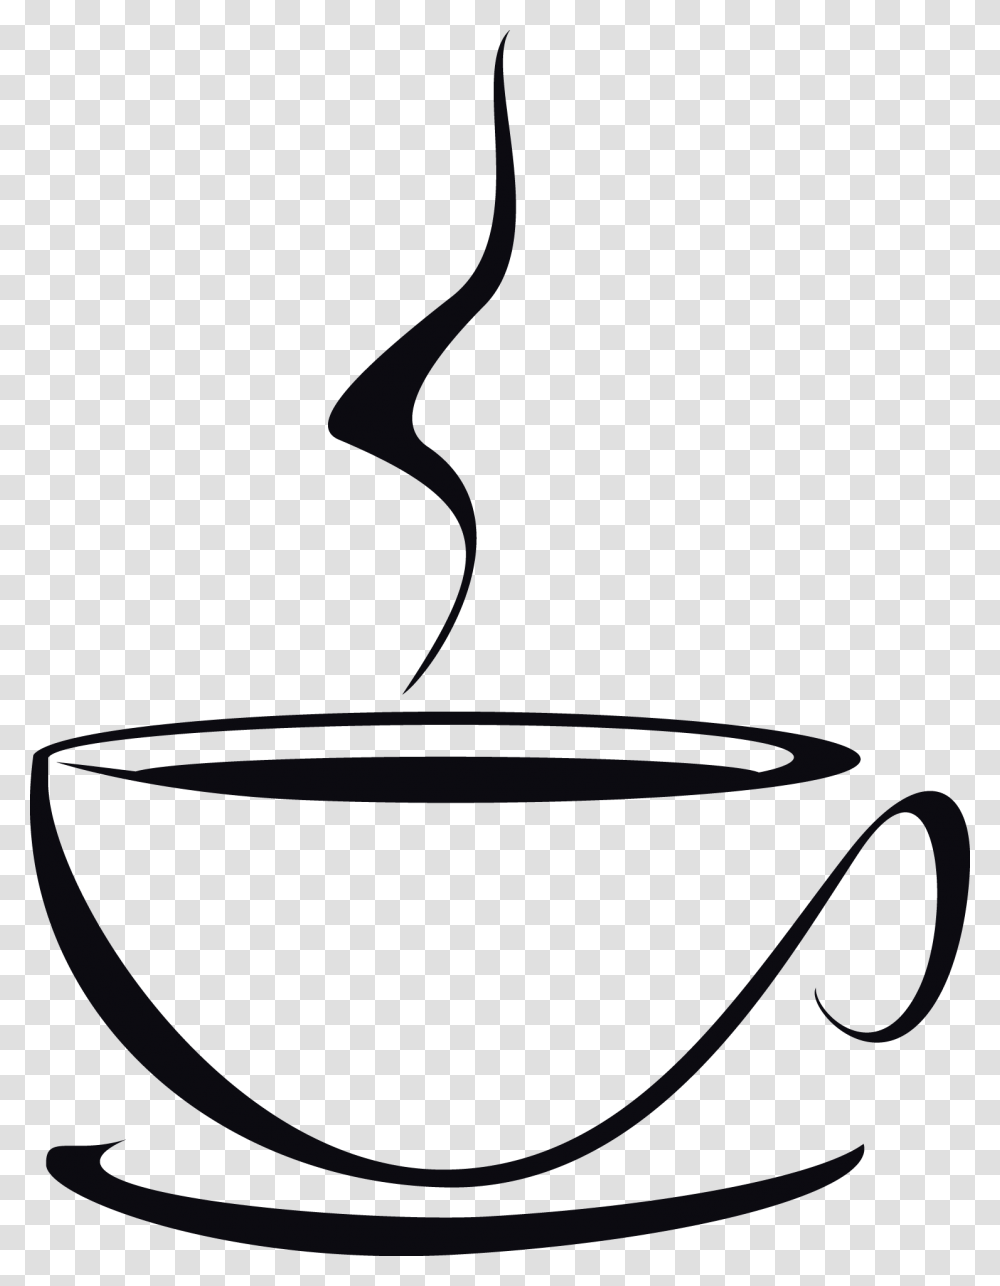 Clip Art Espresso Cup Clipart Coffee Cup, Bowl, Stencil, Silhouette, Bathtub Transparent Png